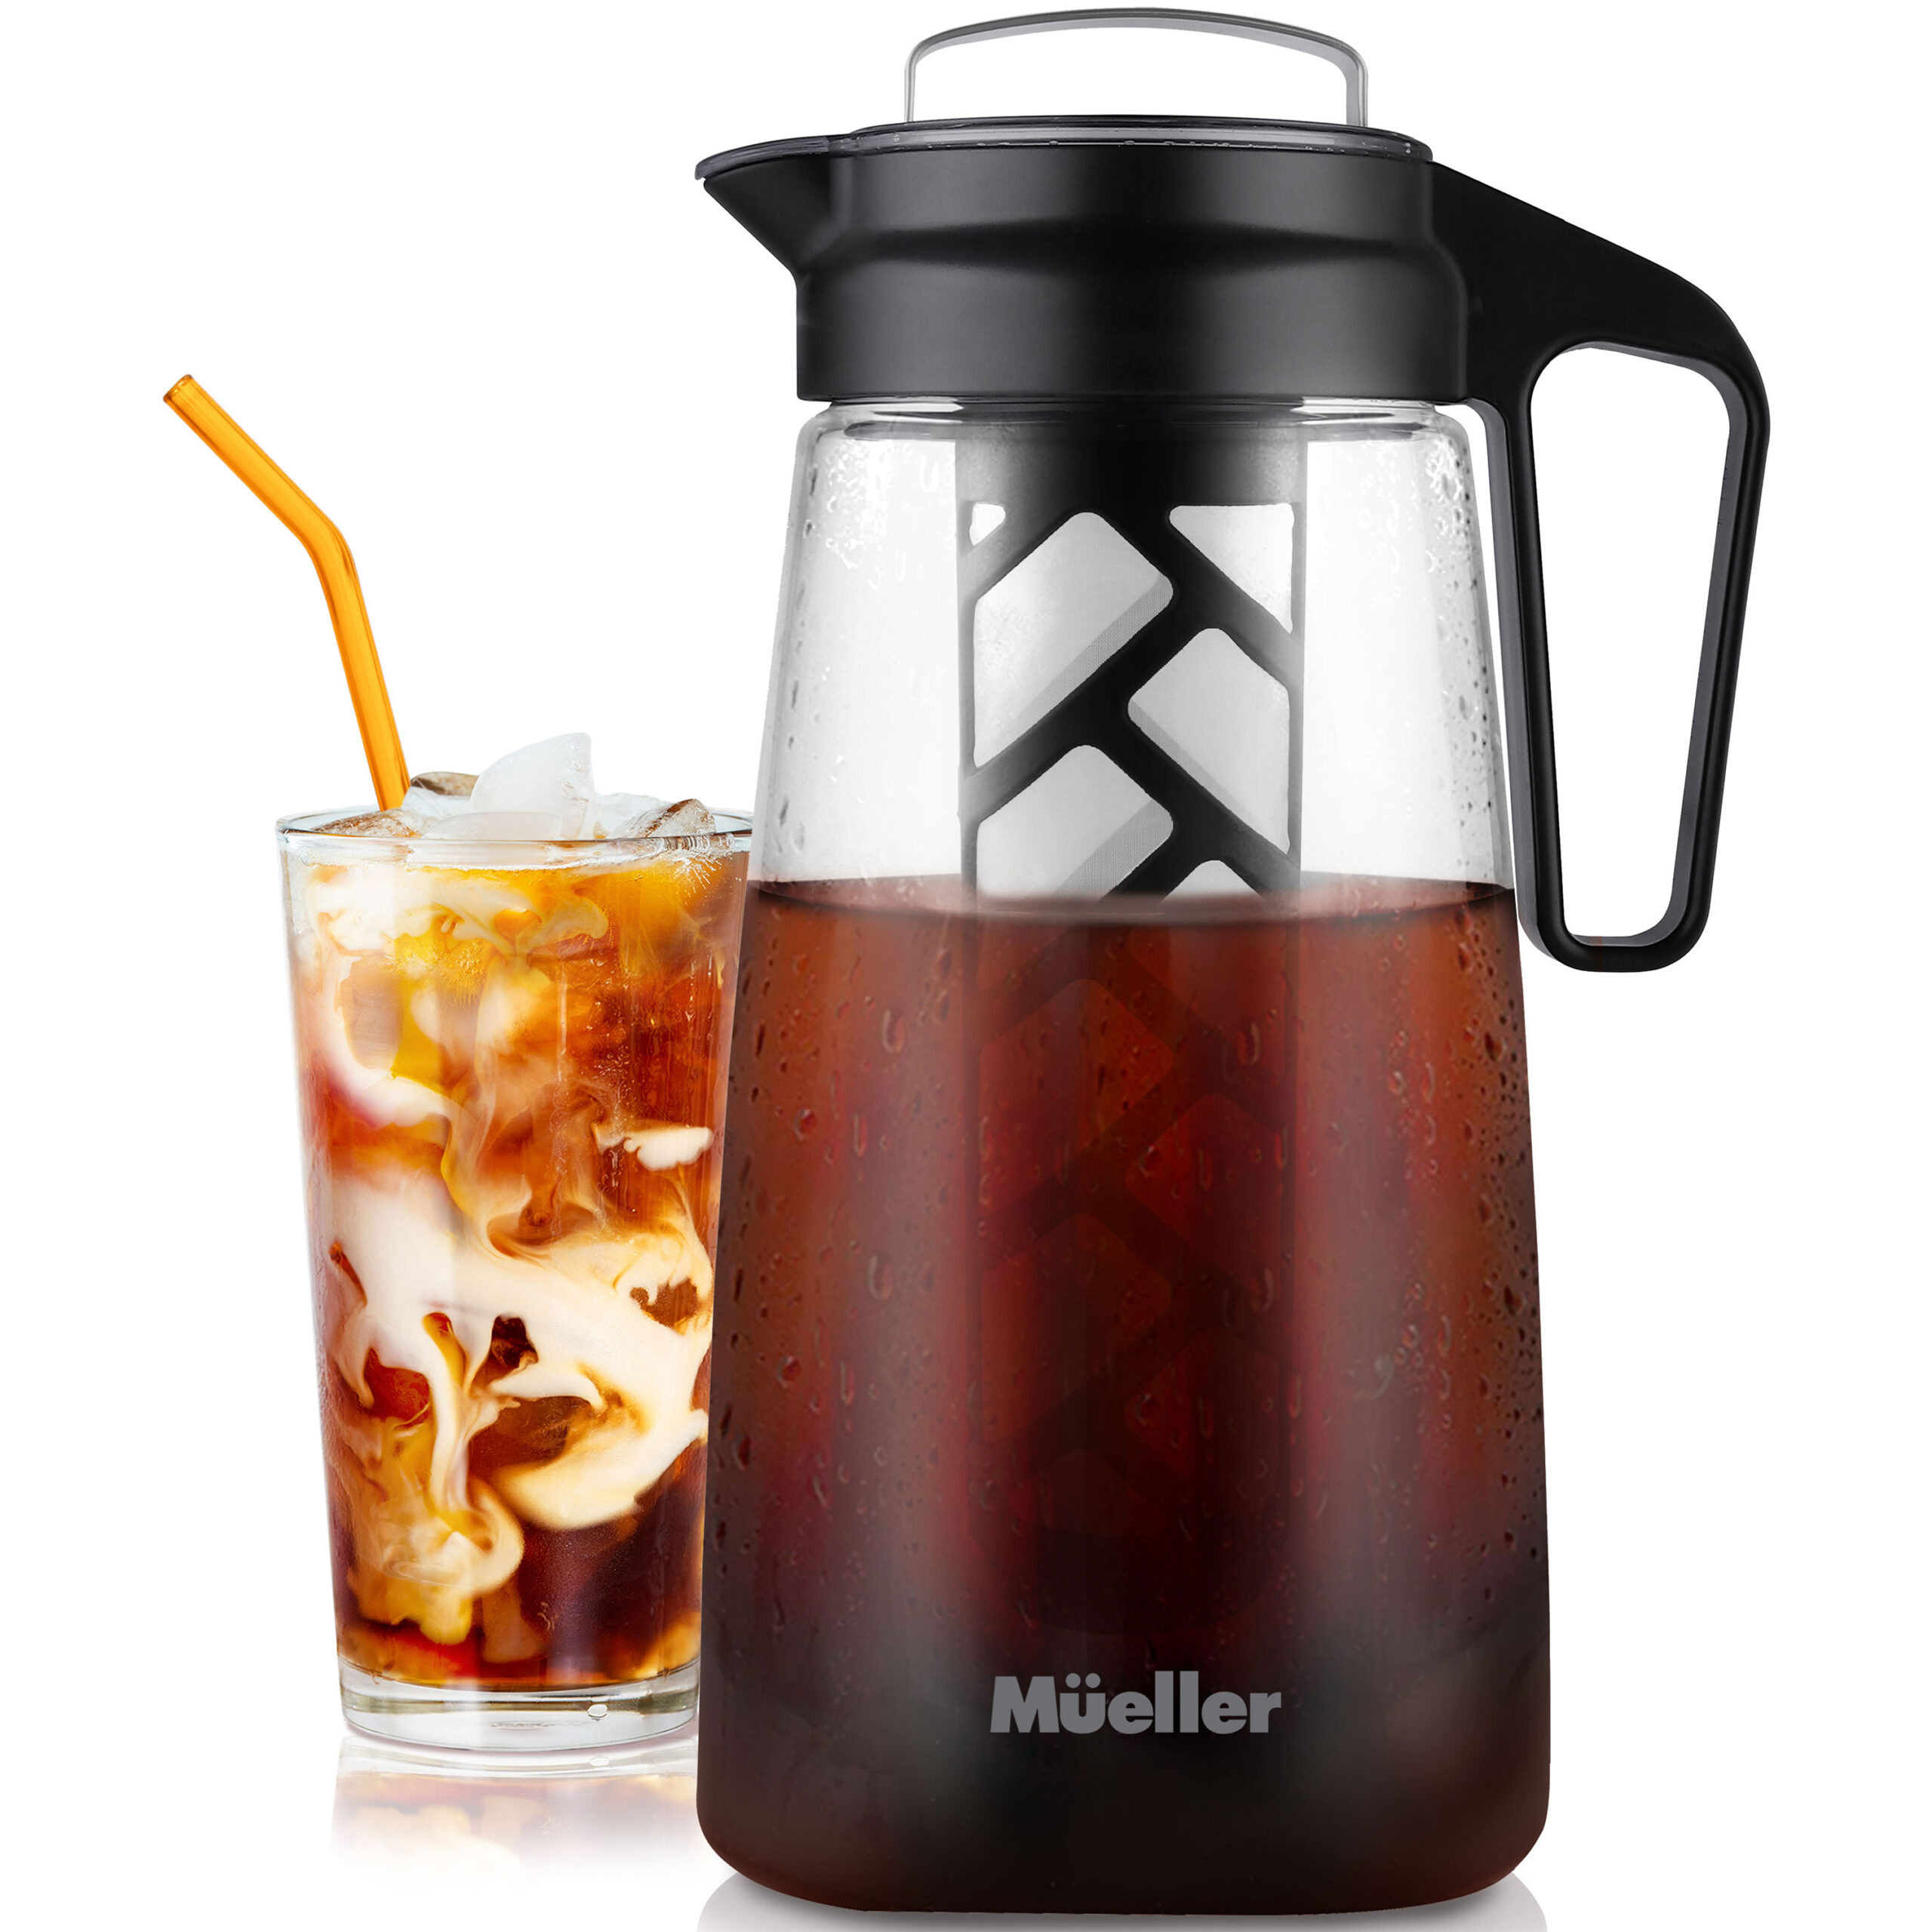 00-Mueller-Cold-Brew-Coffee-Maker-2L-SmoothBrew